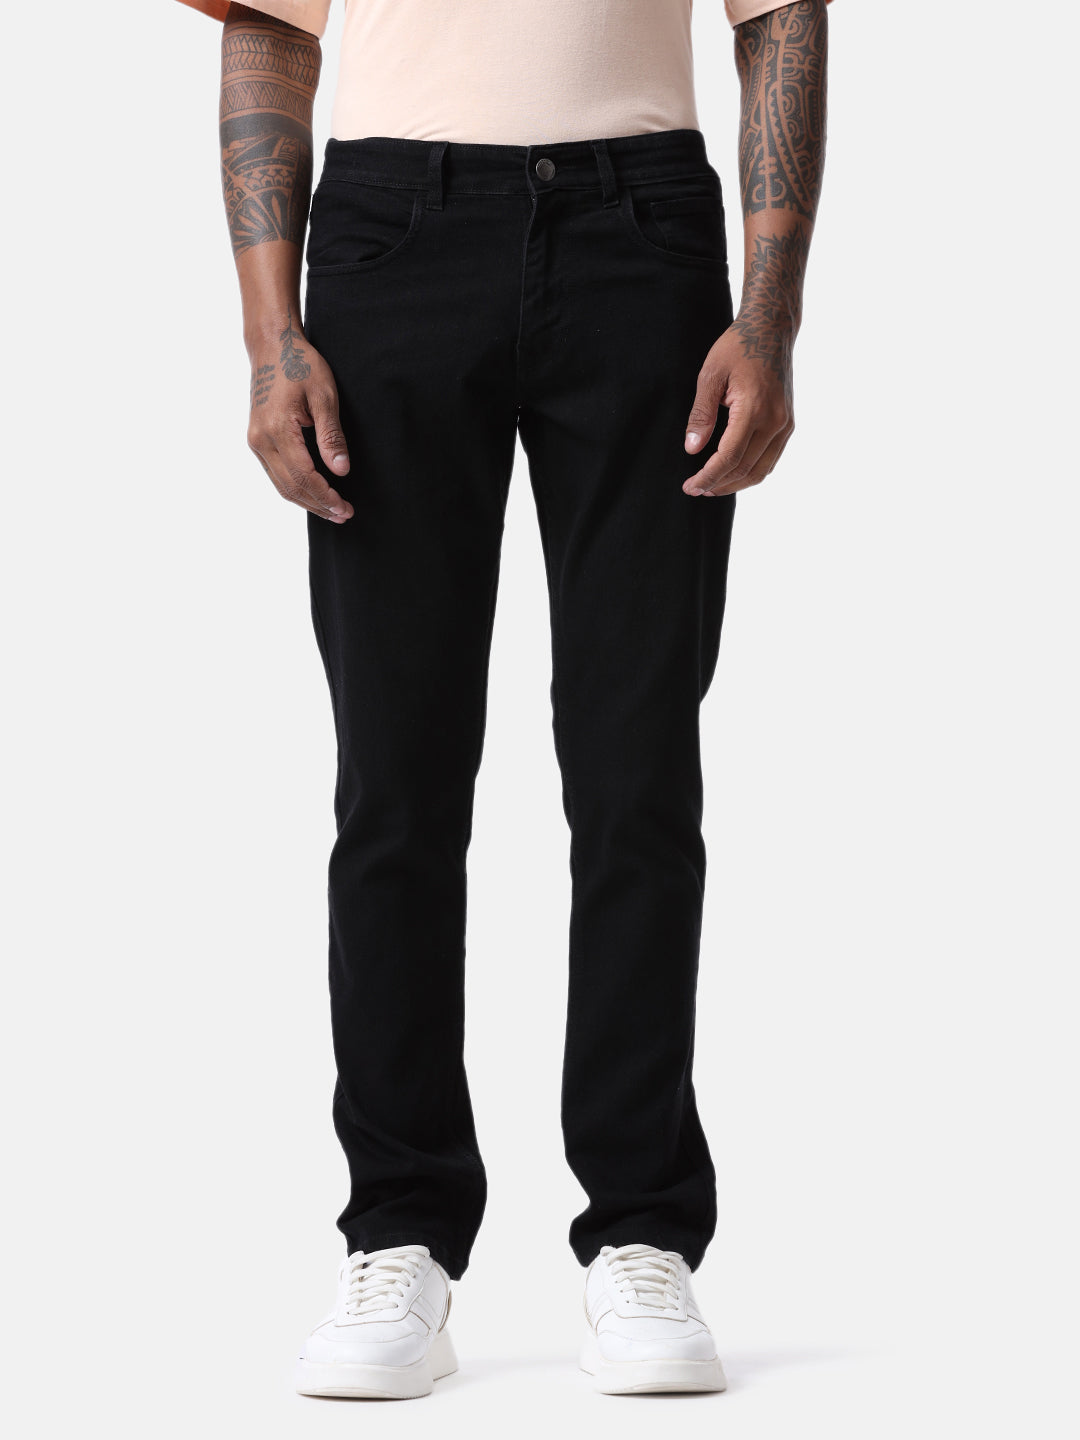 Black Contrast Basic Jeans